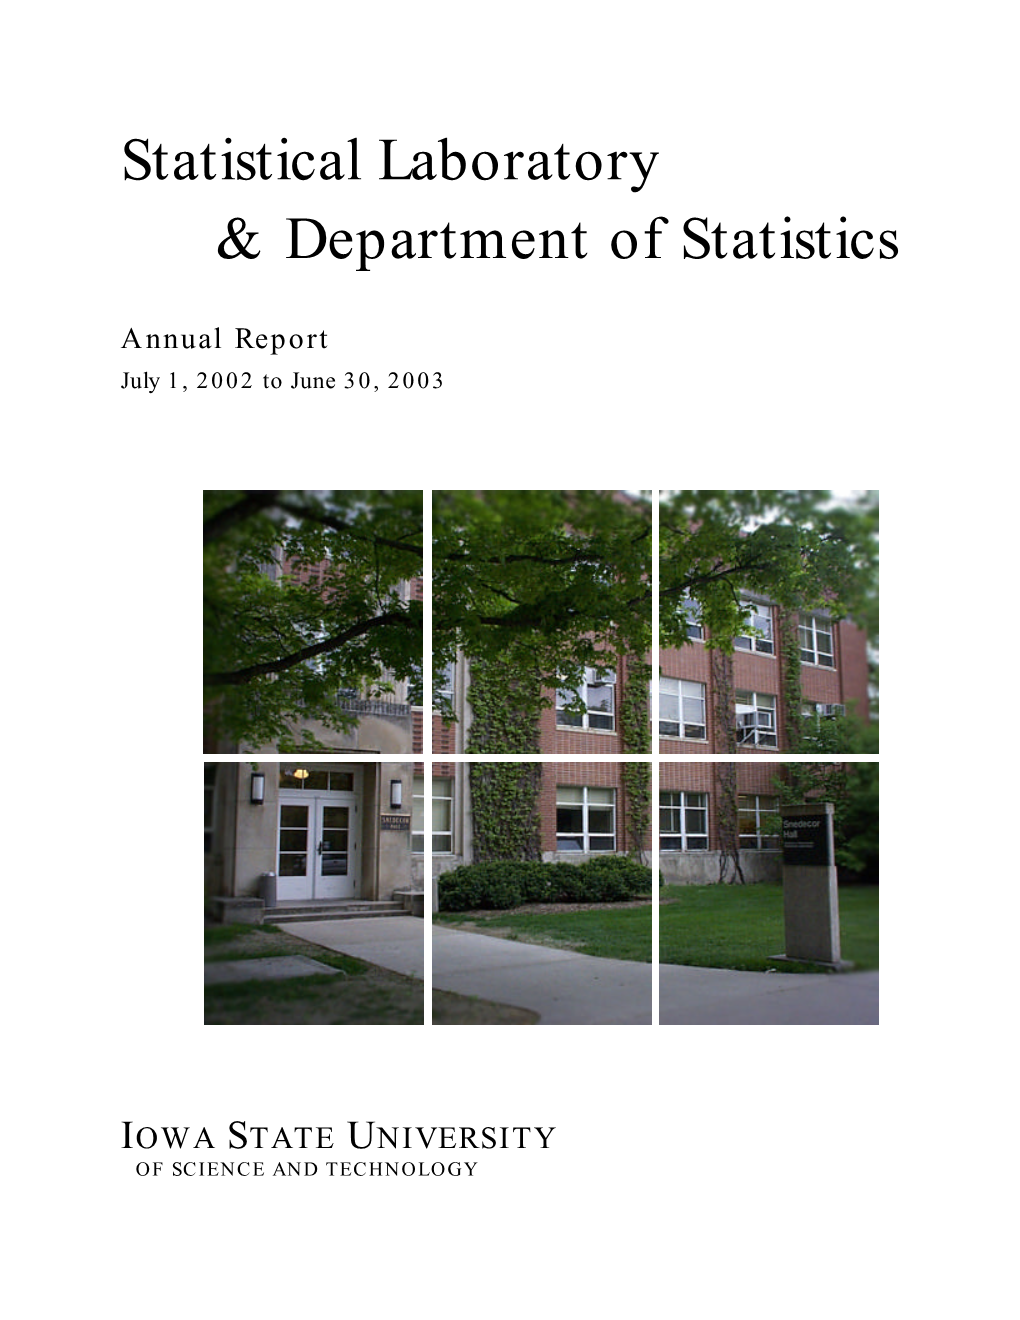 Statistical Laboratory & Department of Statistics